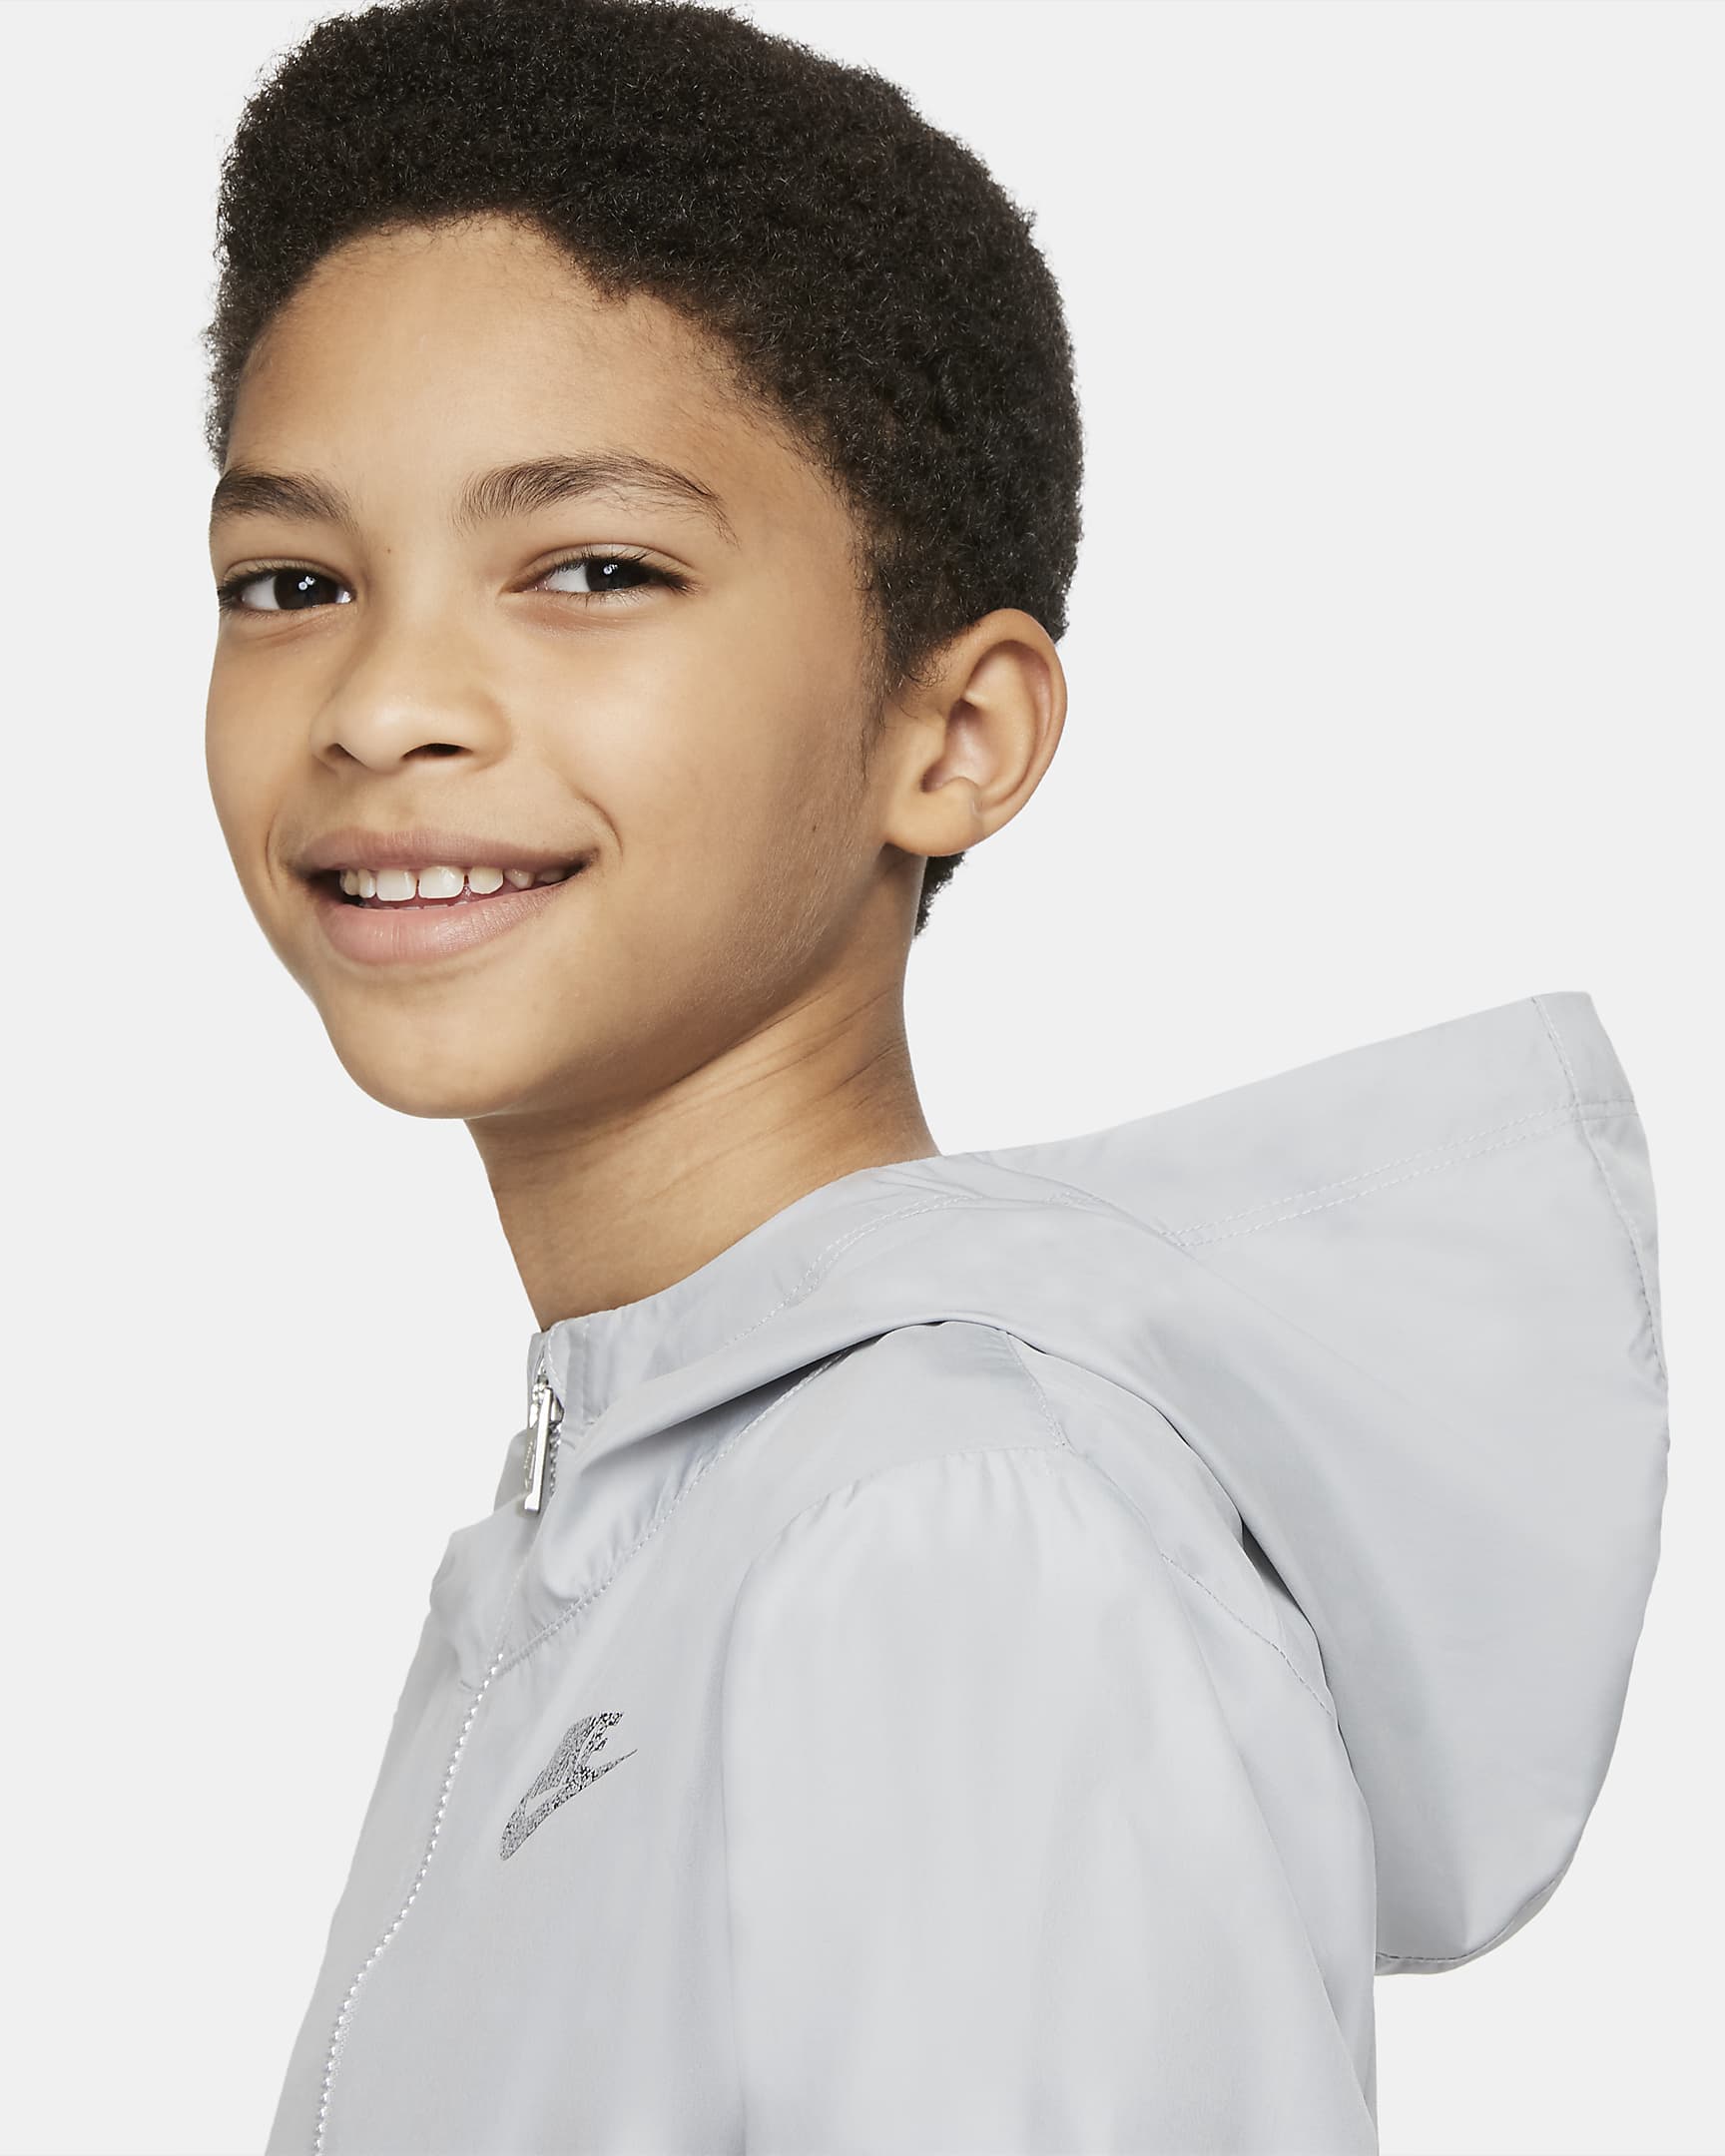 Nike Sportswear Kids Pack Utility Big Kids' (Boys') Jacket. Nike.com